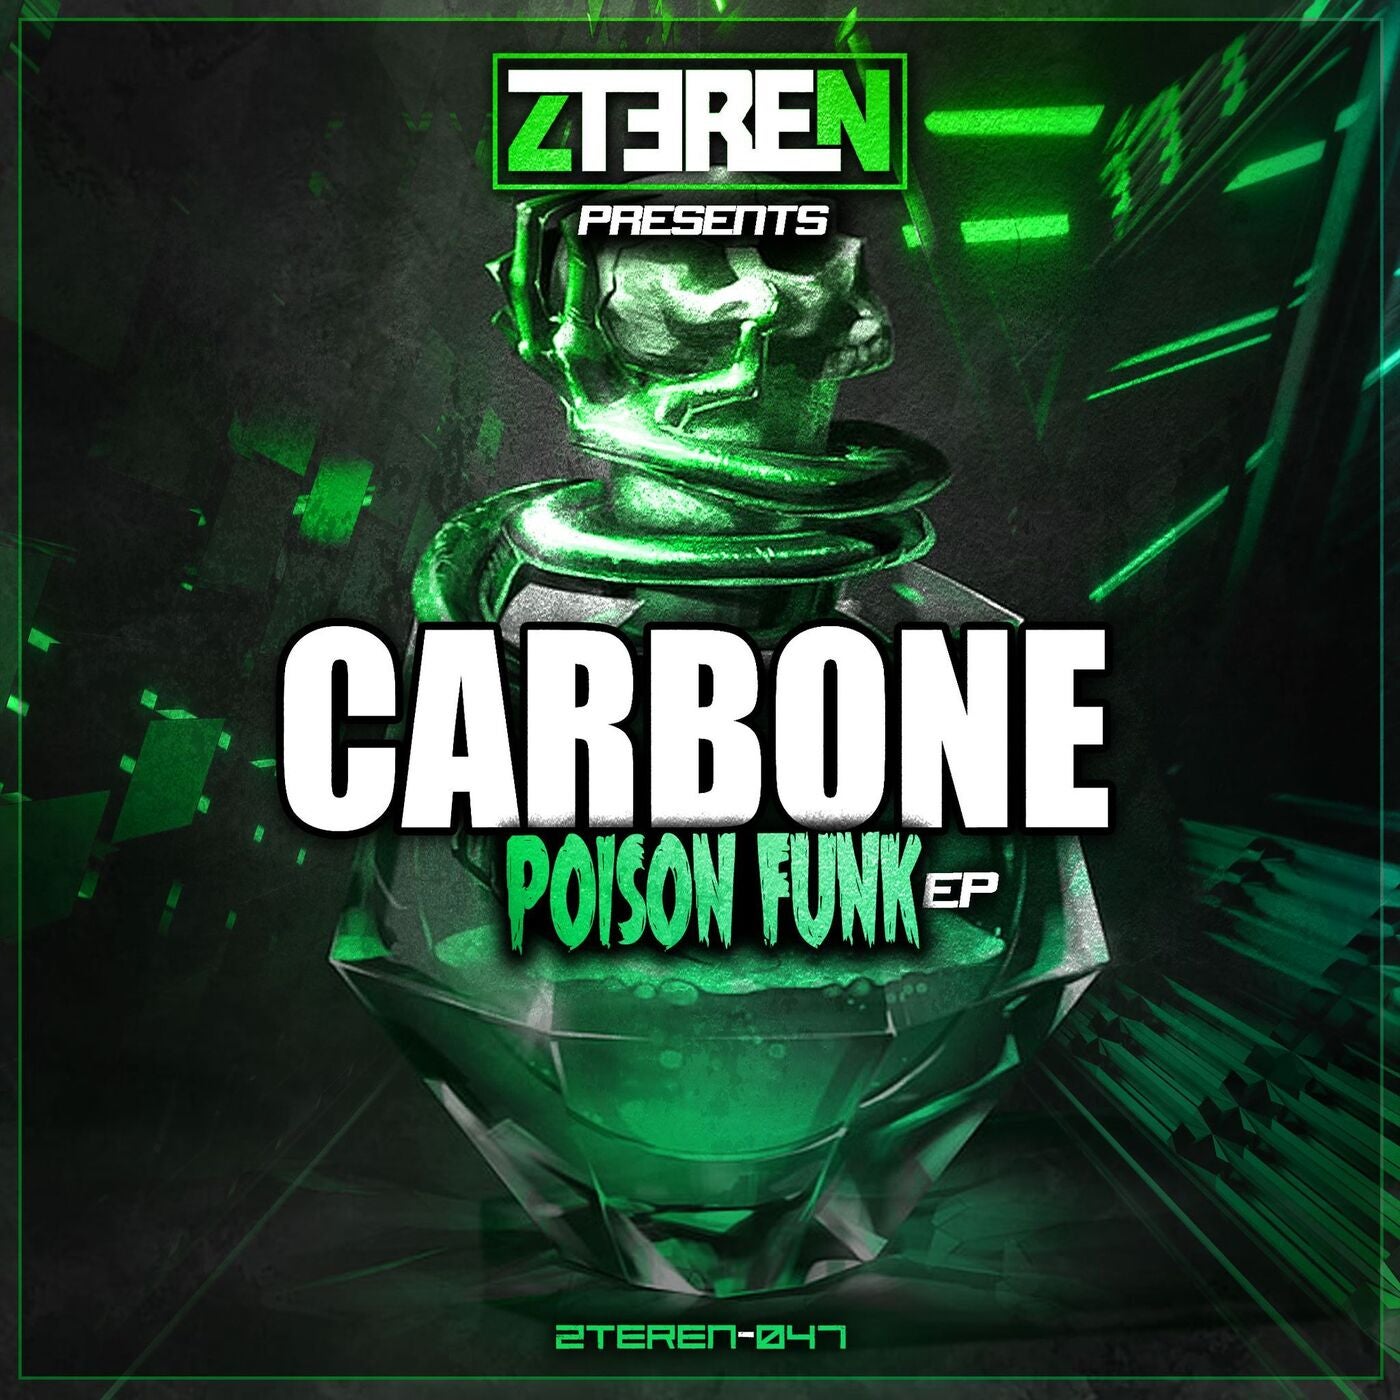 Poison Funk EP